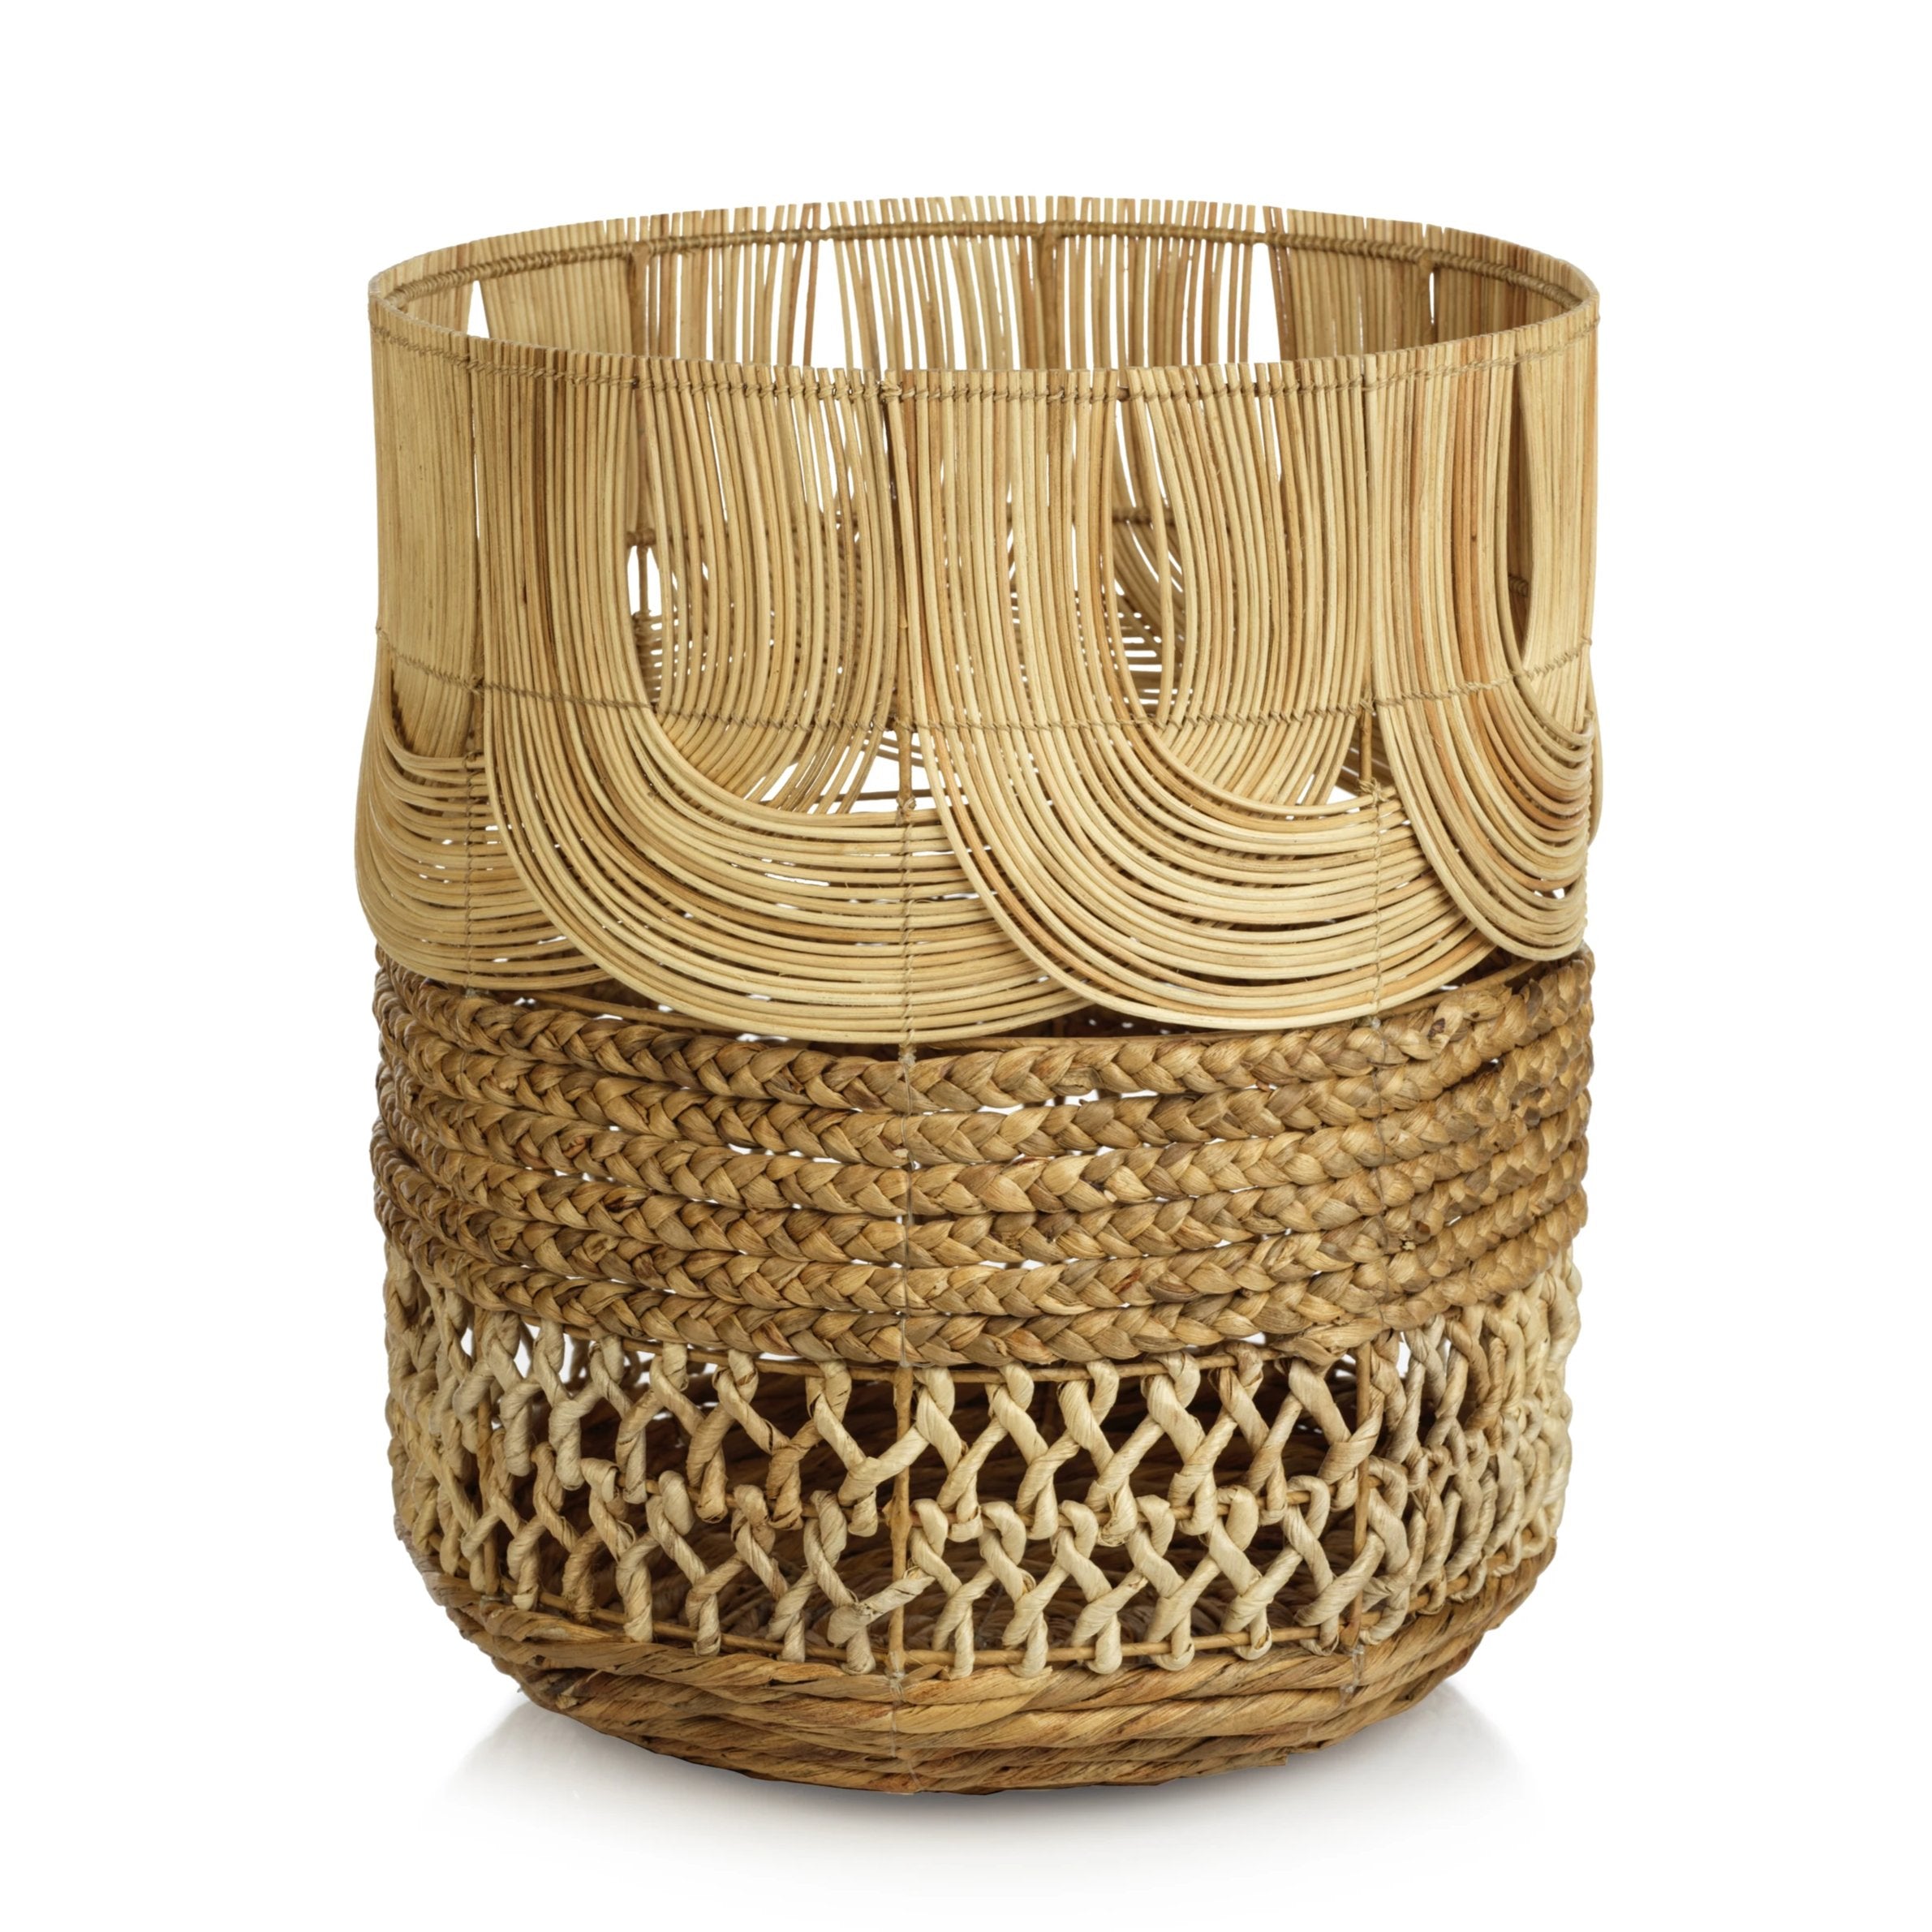 Rattan & Water Hyacinth Basket - CARLYLE AVENUE